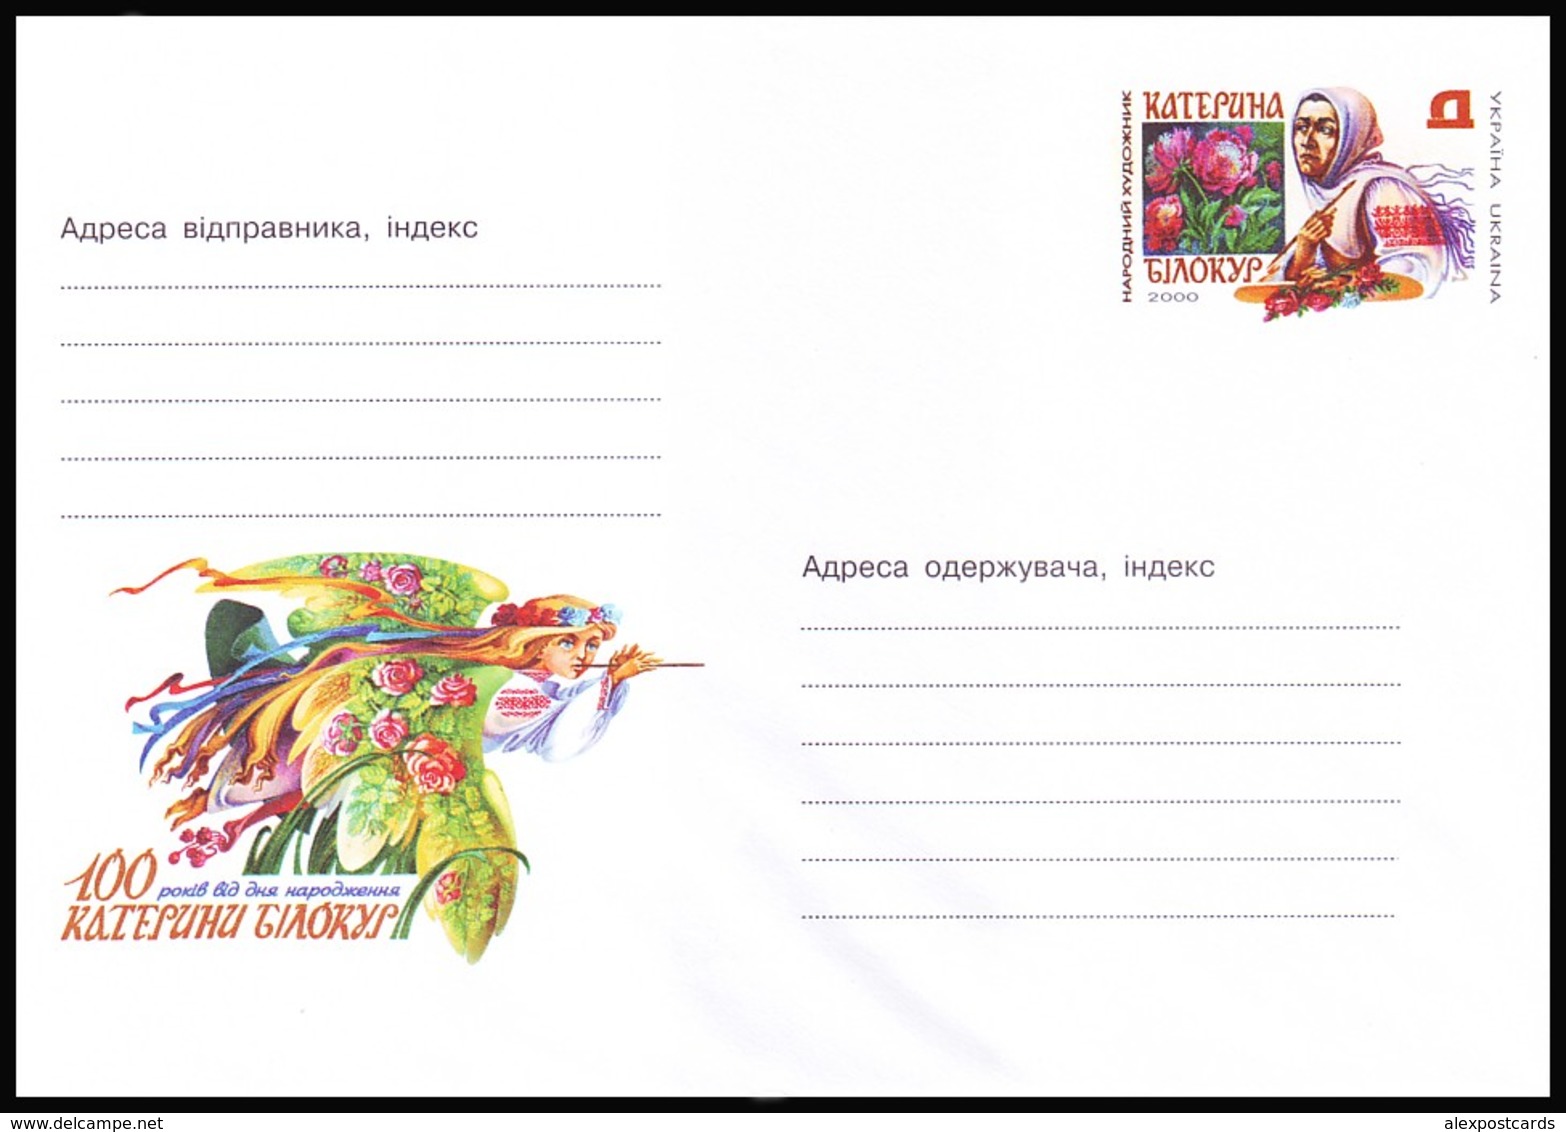 UKRAINE 2000. (0-3051). KATERYNA BILOKUR, PAINTING ARTIST. Postal Stationery Stamped Cover (**) - Ukraine